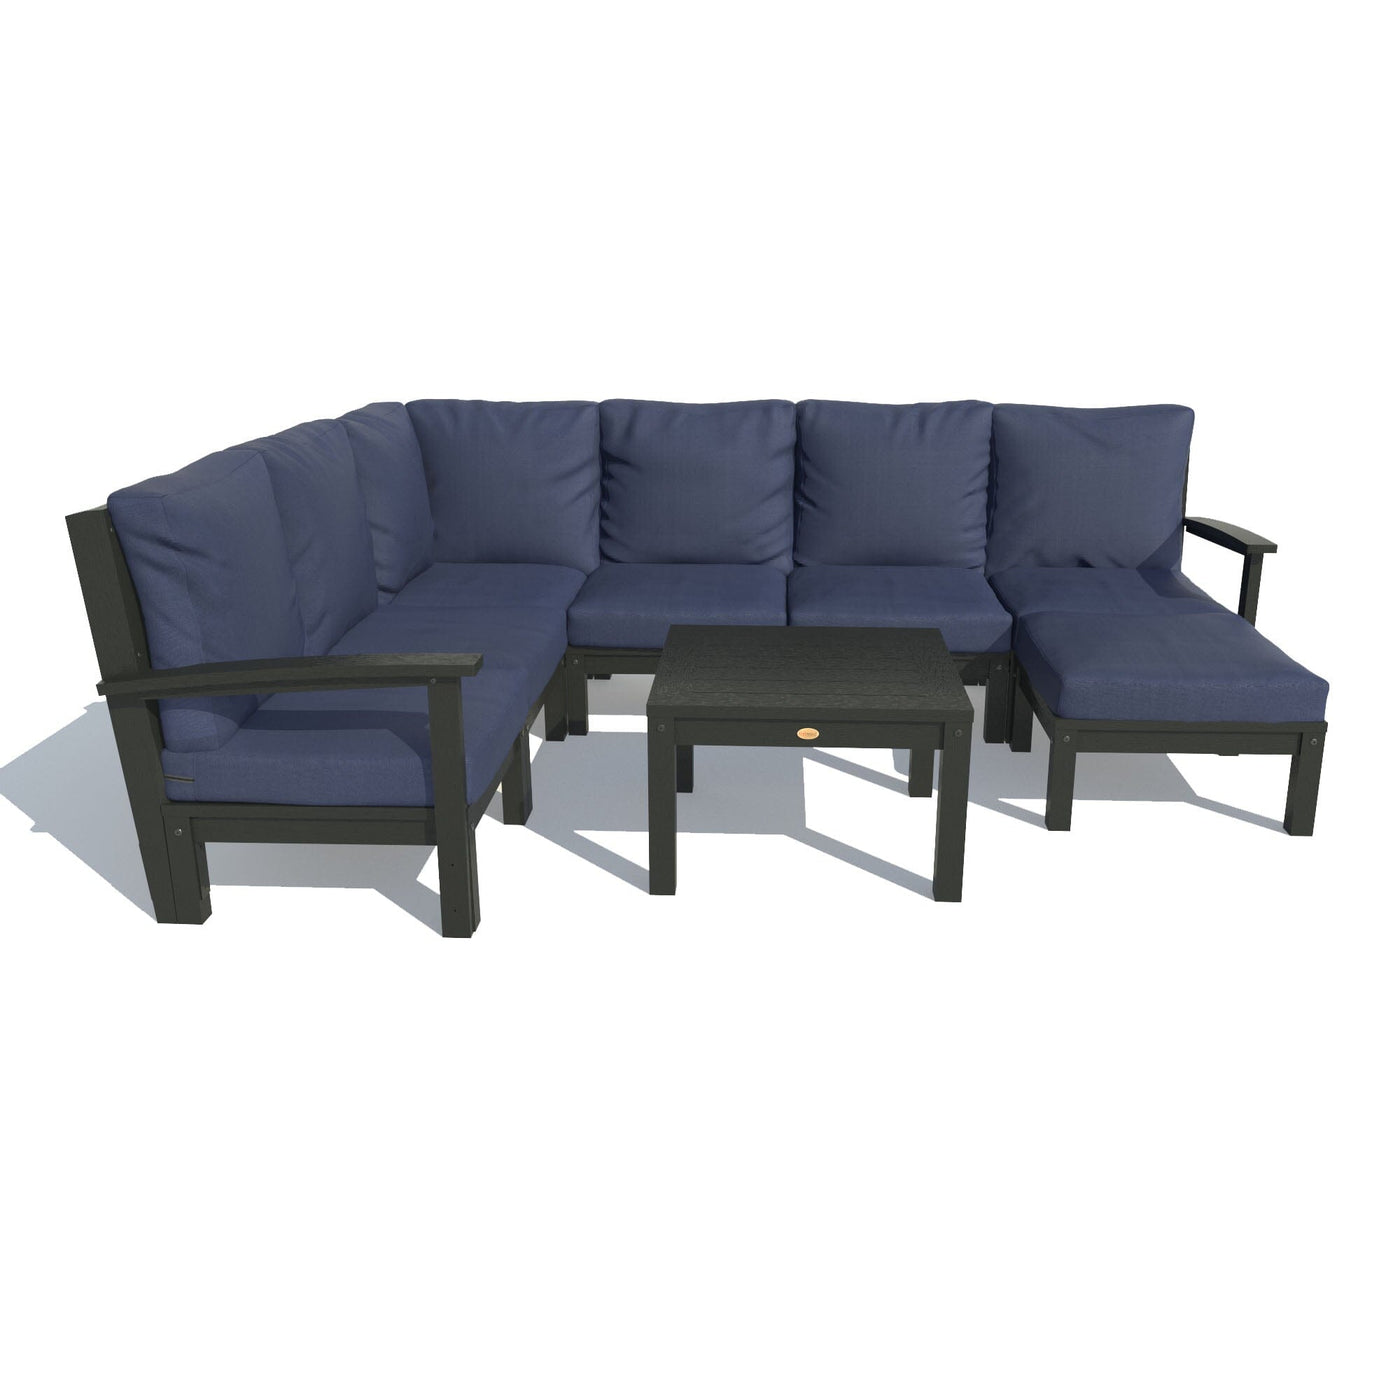 Bespoke Deep Seating: 8 Piece Sectional Sofa Set with Ottoman and Side Table Deep Seating Highwood USA Navy Black 